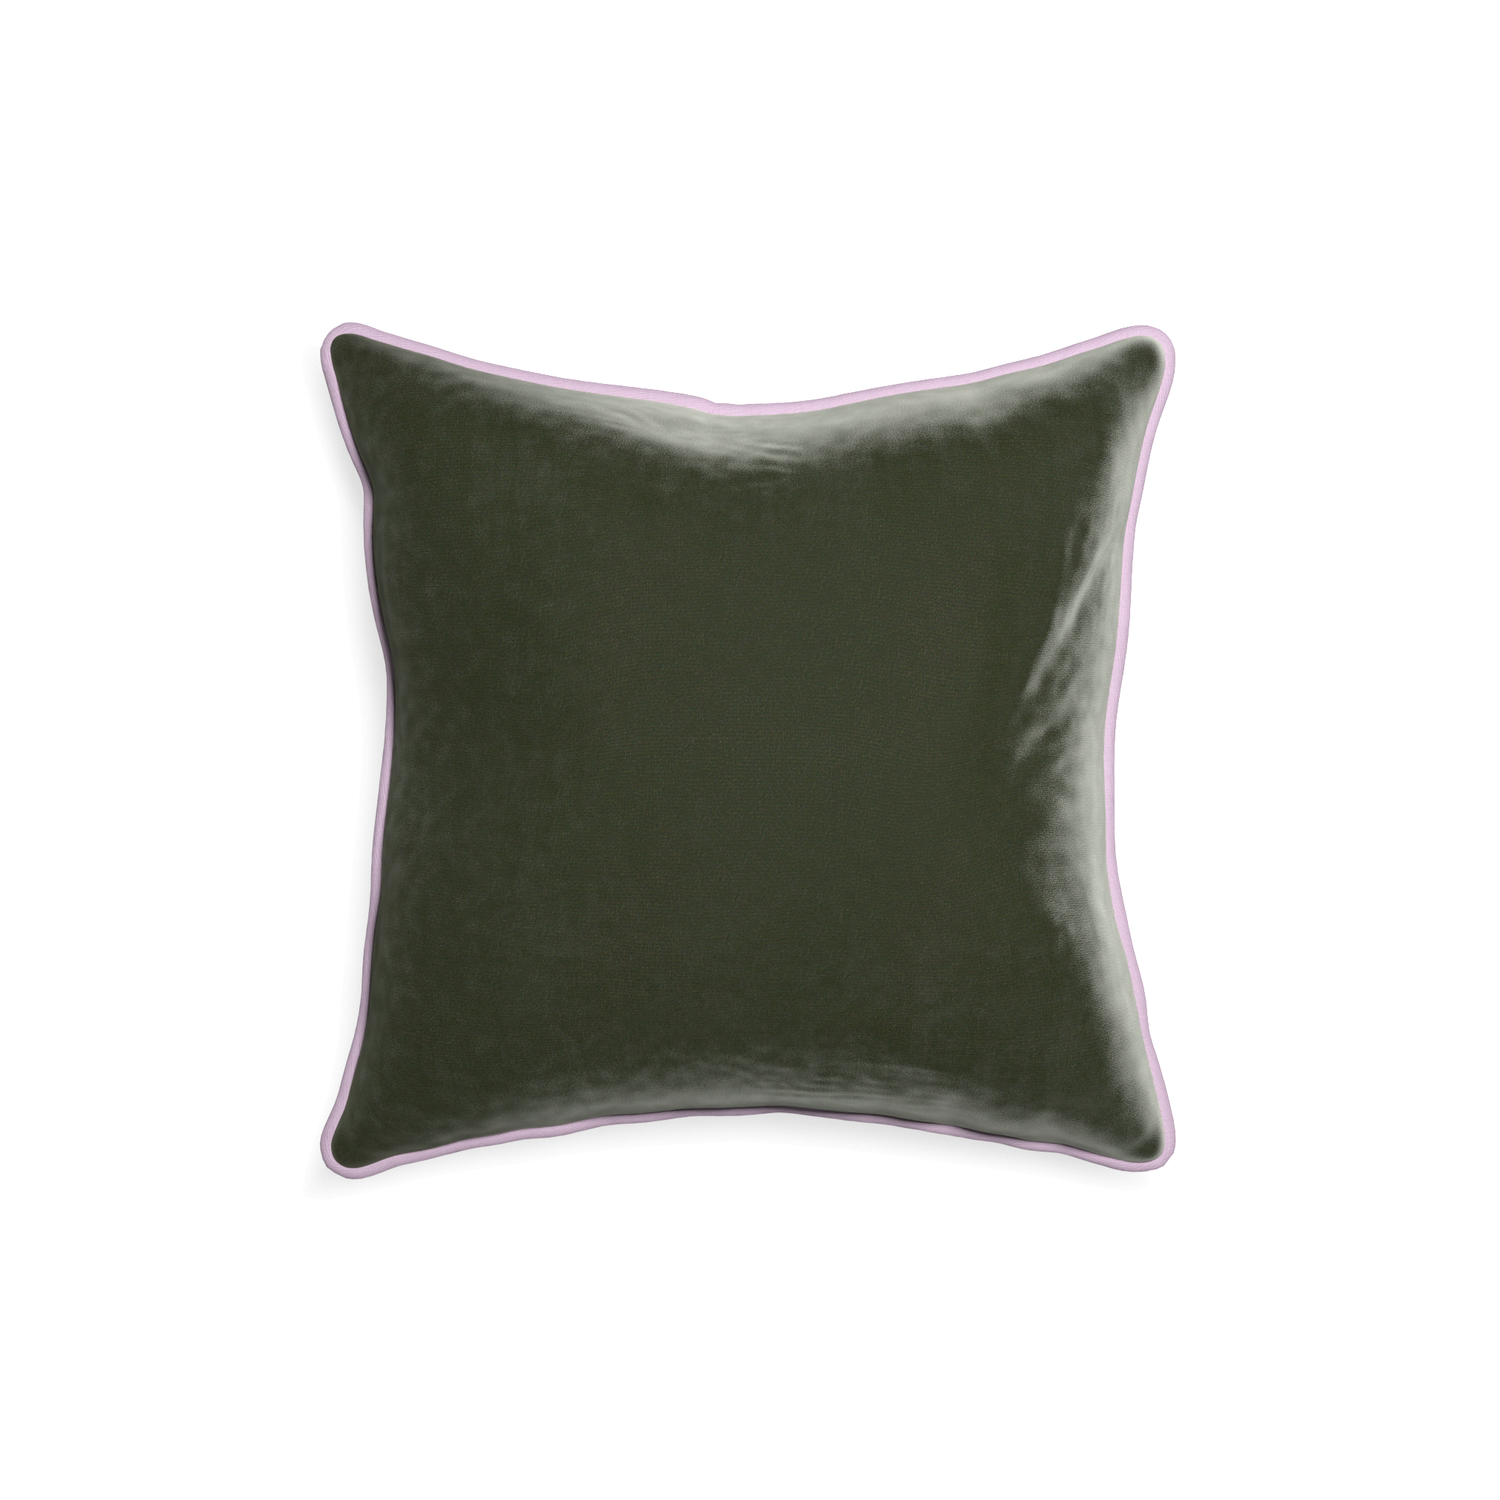 18-square fern velvet custom pillow with l piping on white background